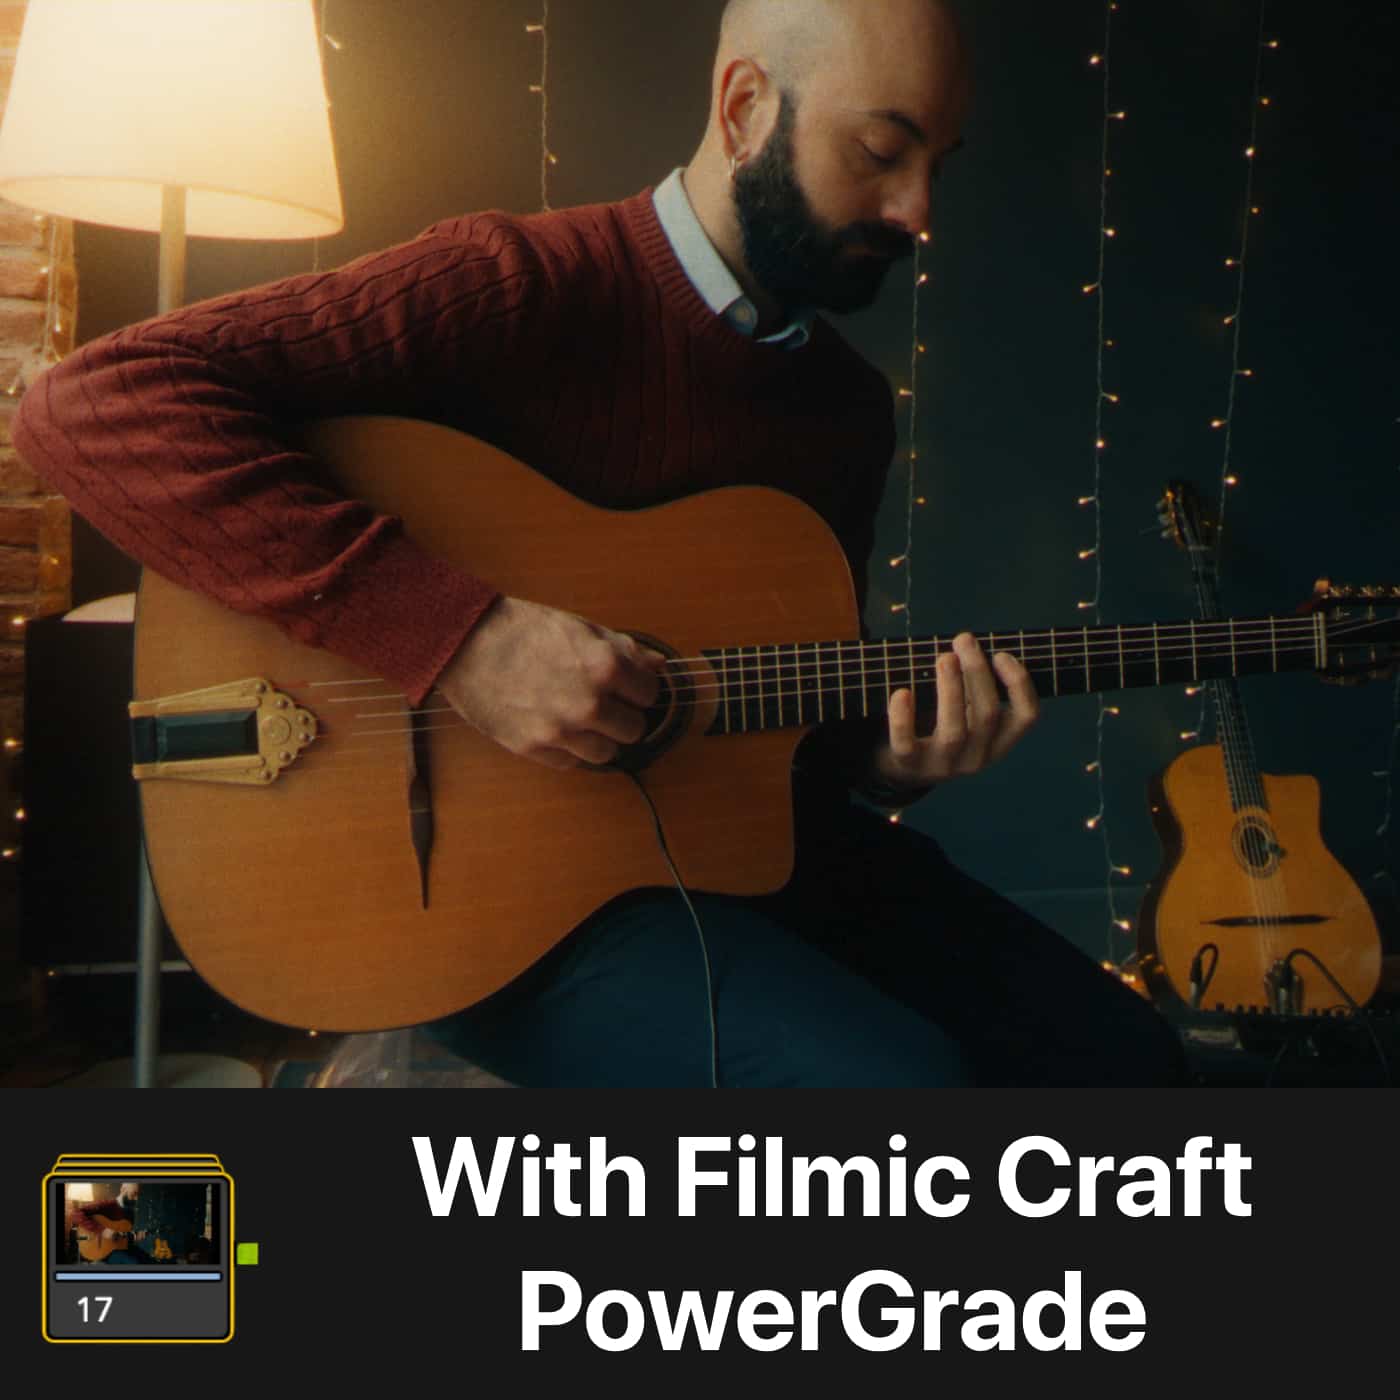 Filmic Craft PowerGrade for iPhone